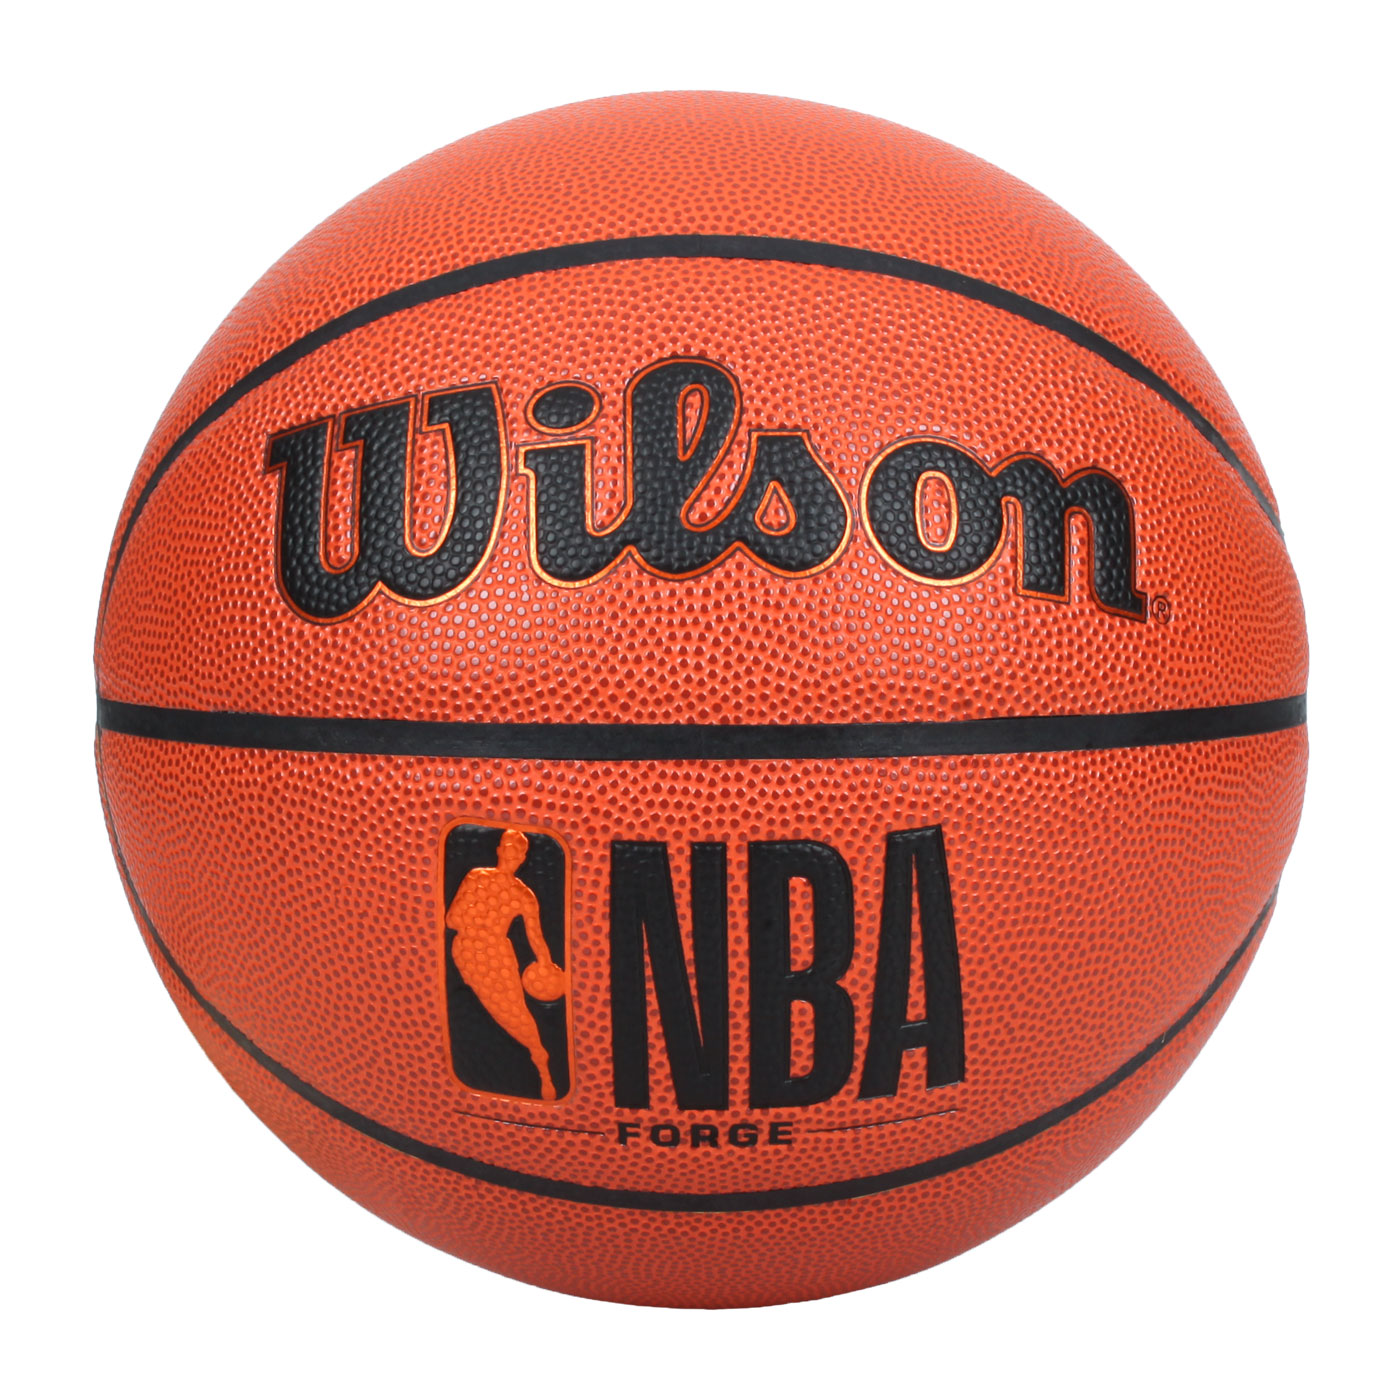 WILSON NBA FORGE系列合成皮籃球#7 WTB8200XB07 - 橘黑